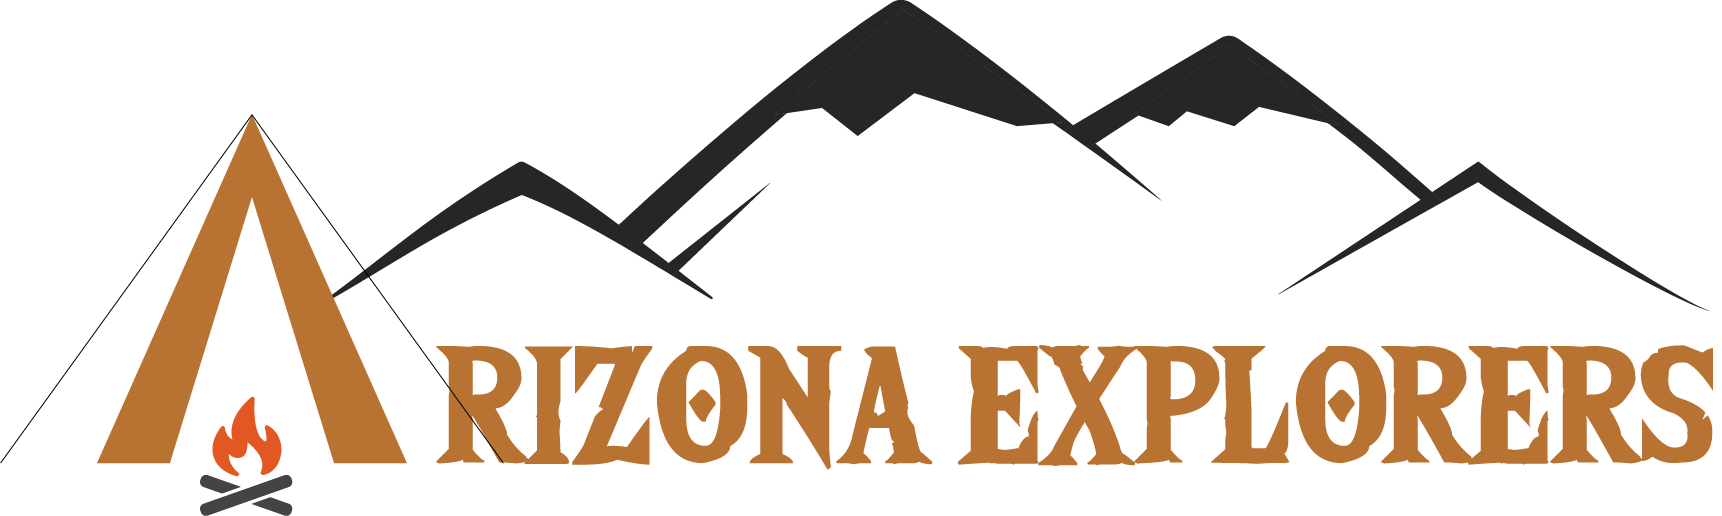 Arizona Explorers